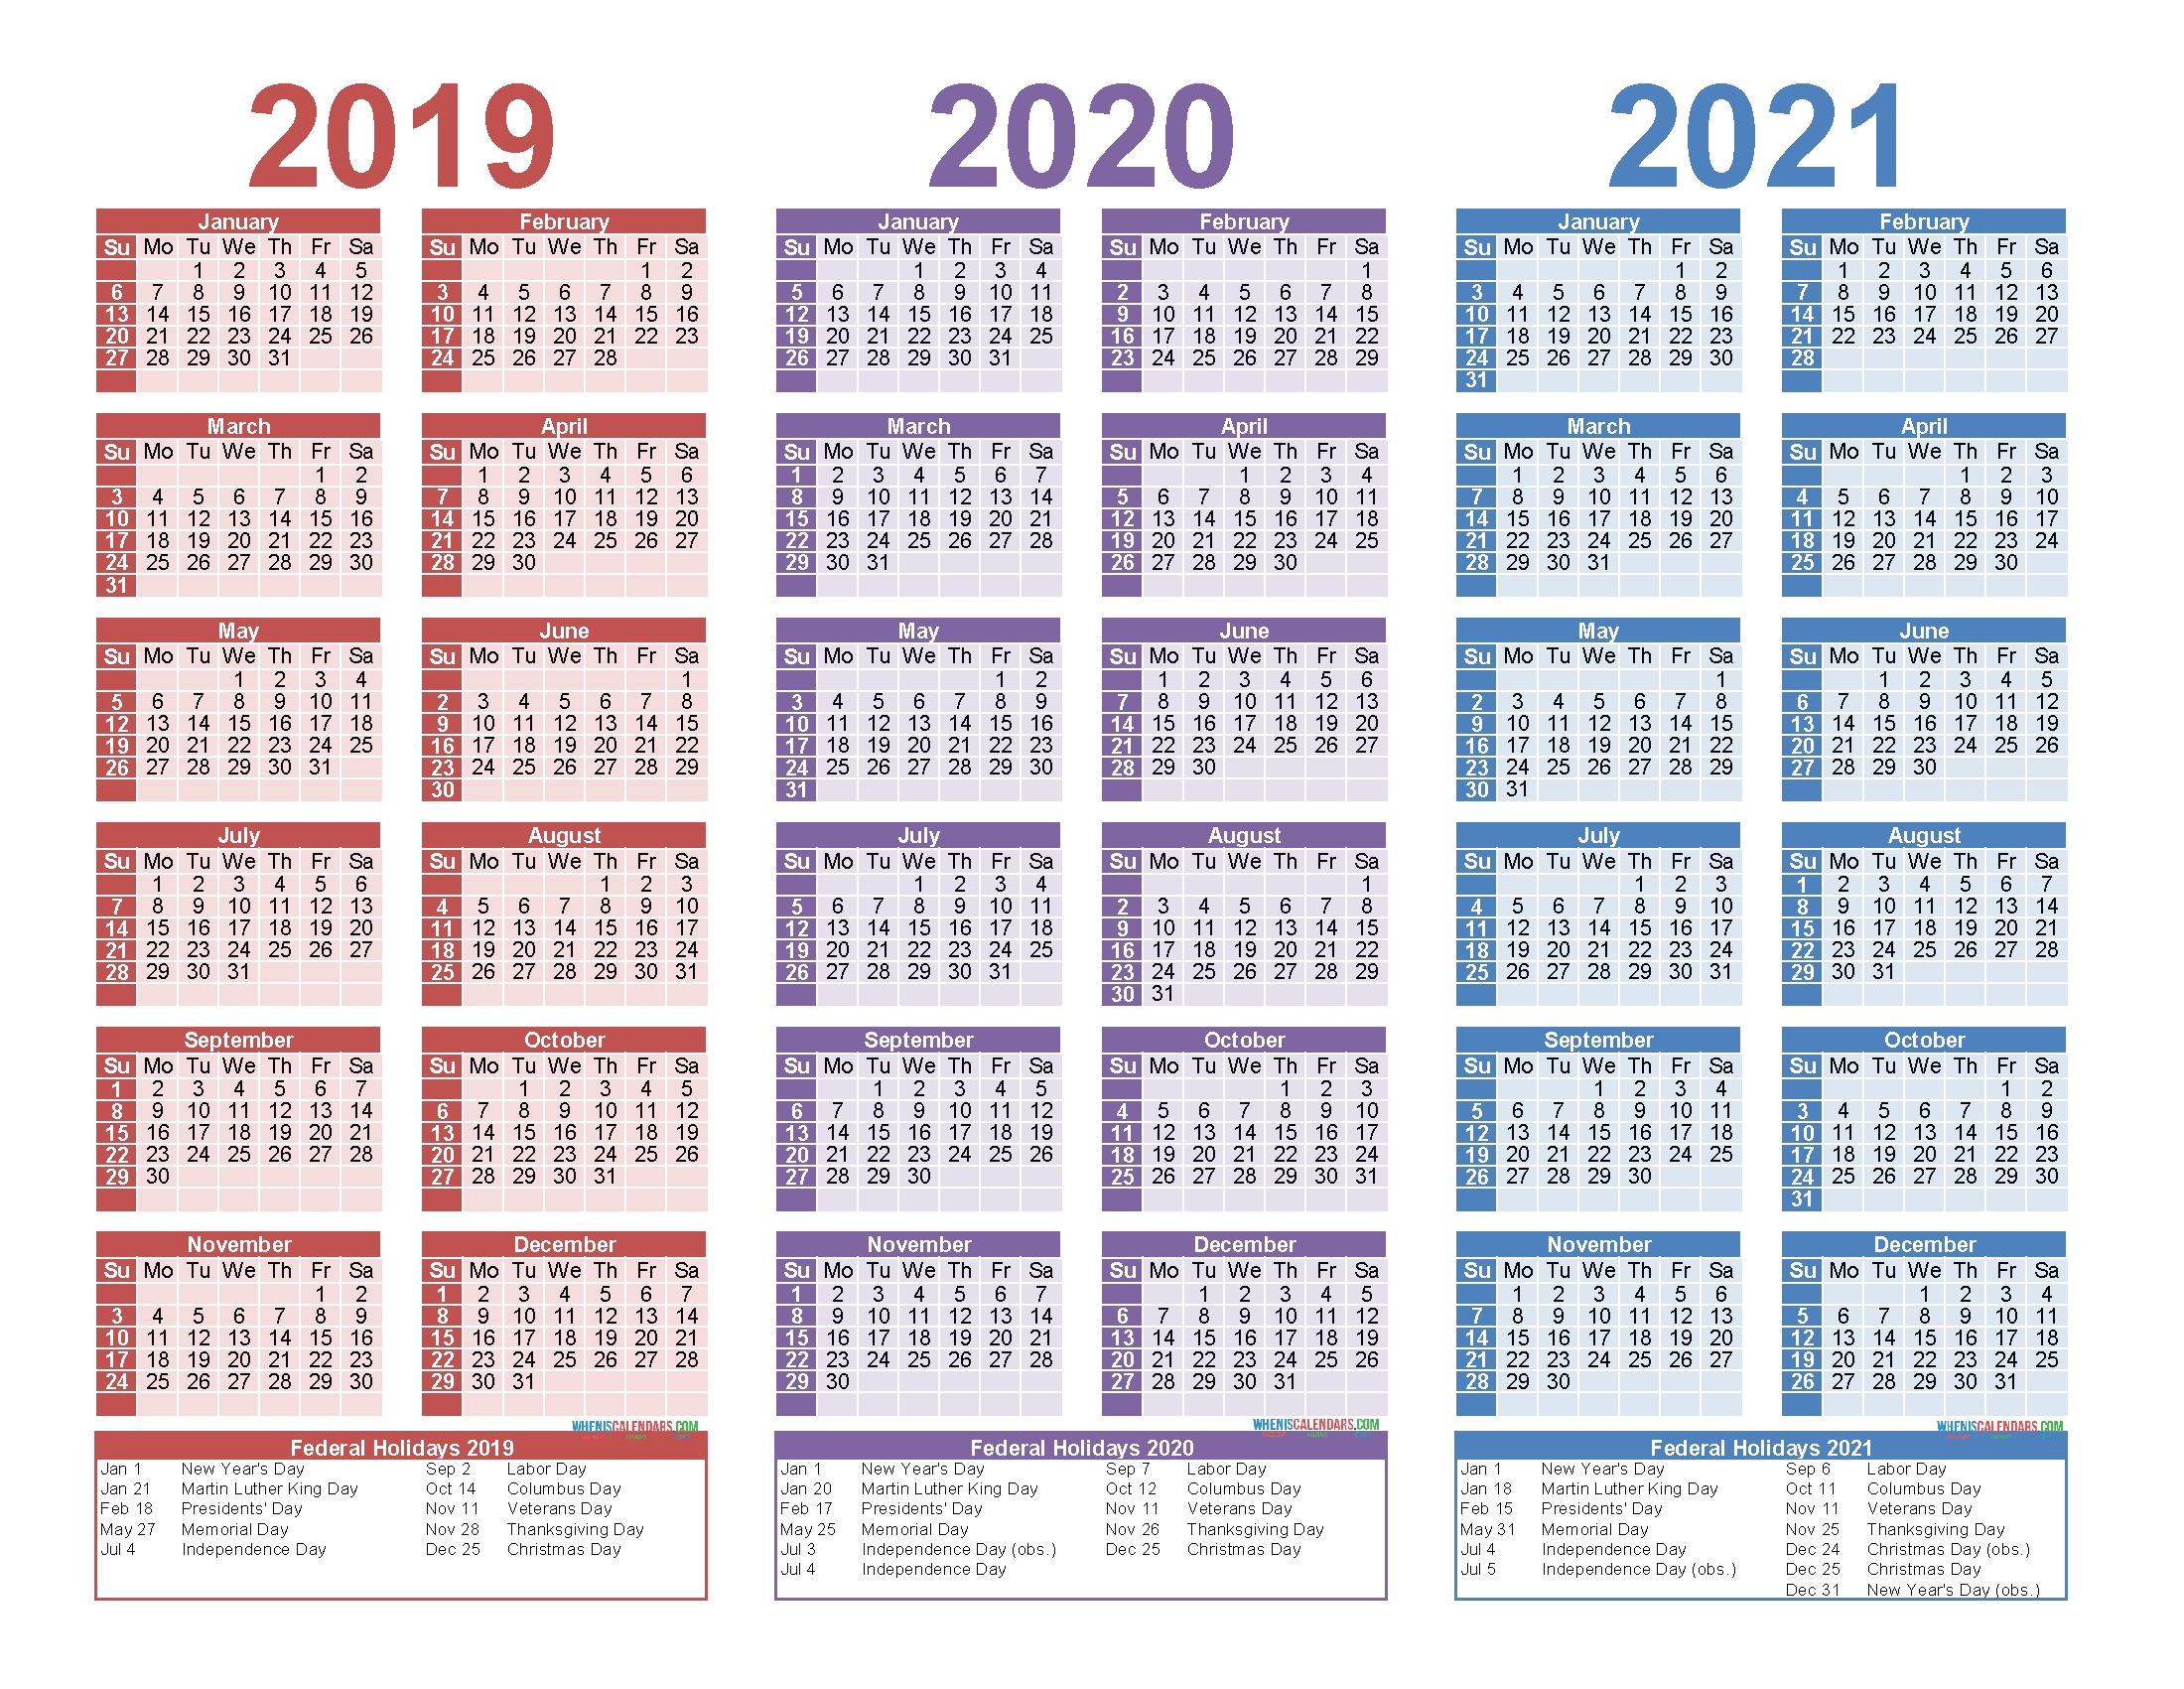 Free Printable 2019 2020 2021 Calendar With Holidays | Free within Free Printable Calendar For 2019 2020 2021